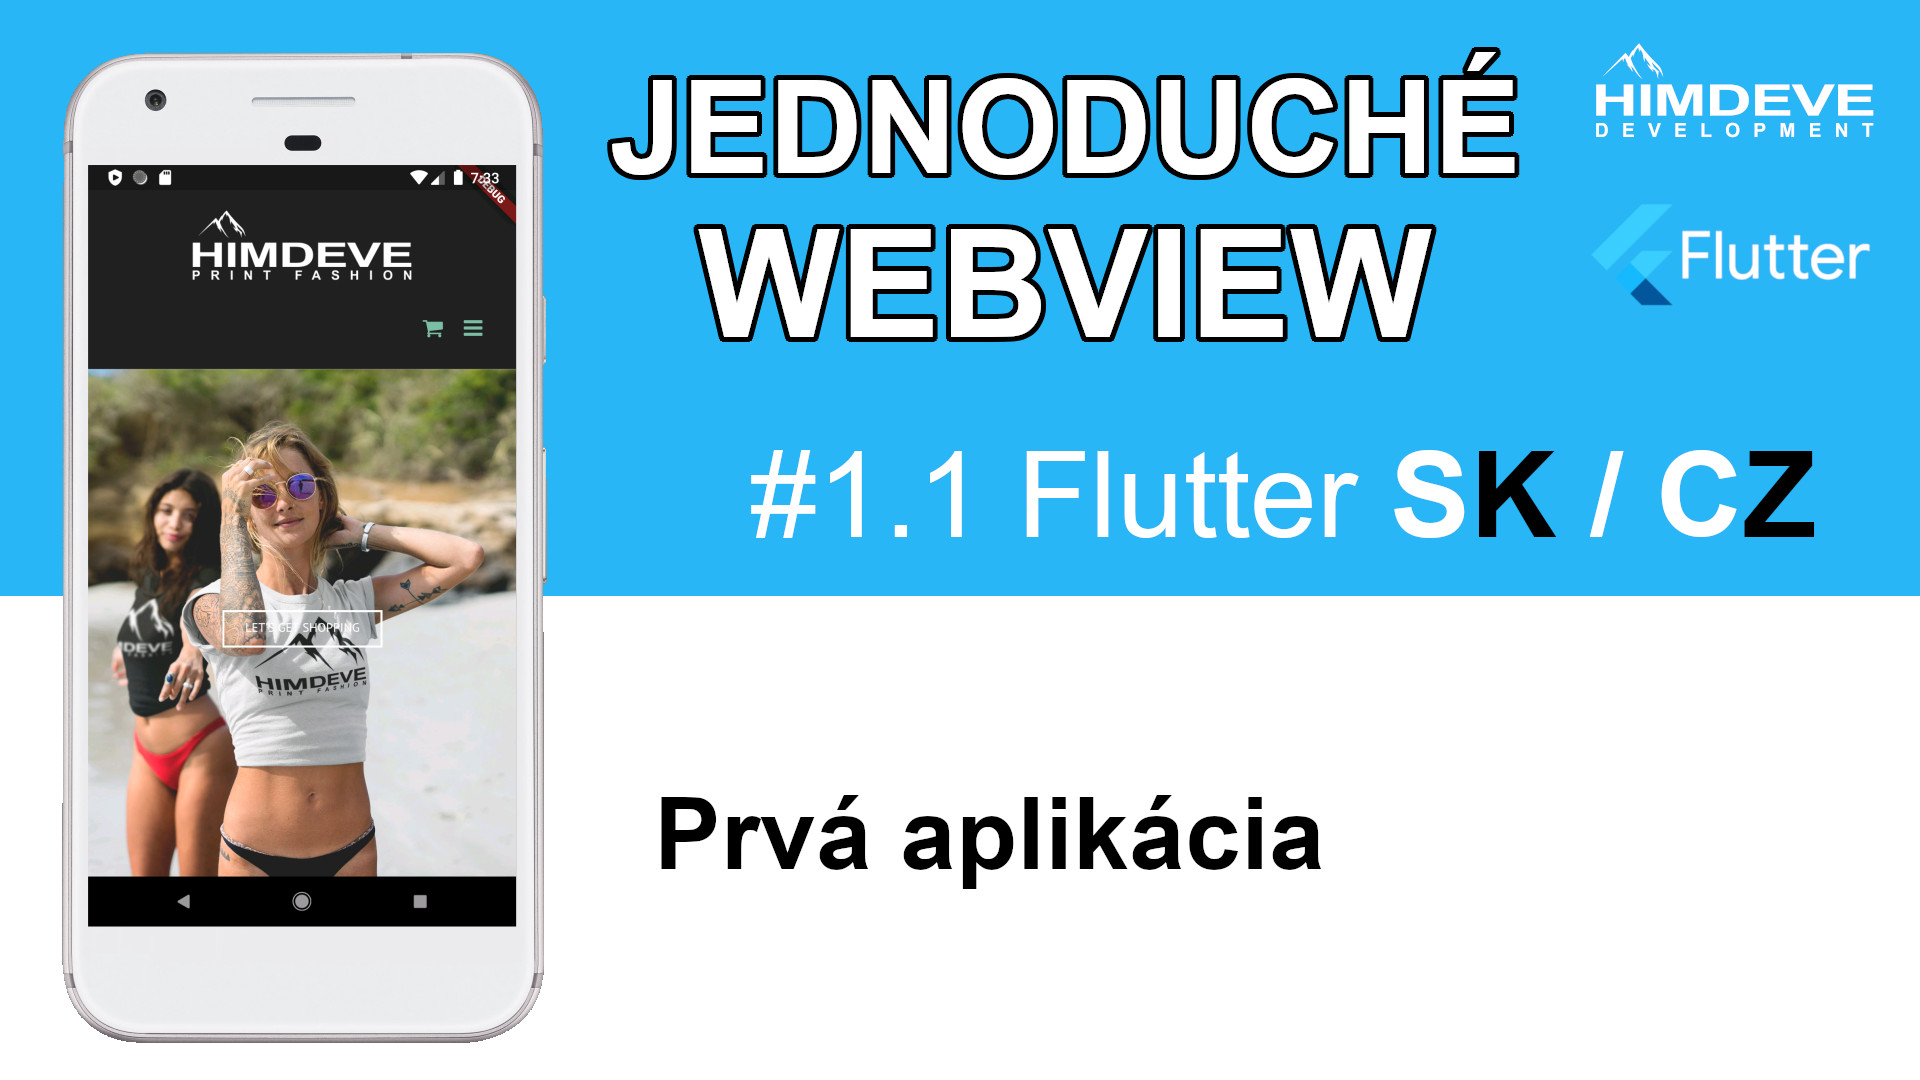 #1_1 Jedonduche Webview Flutter SK / CZ tutorialy